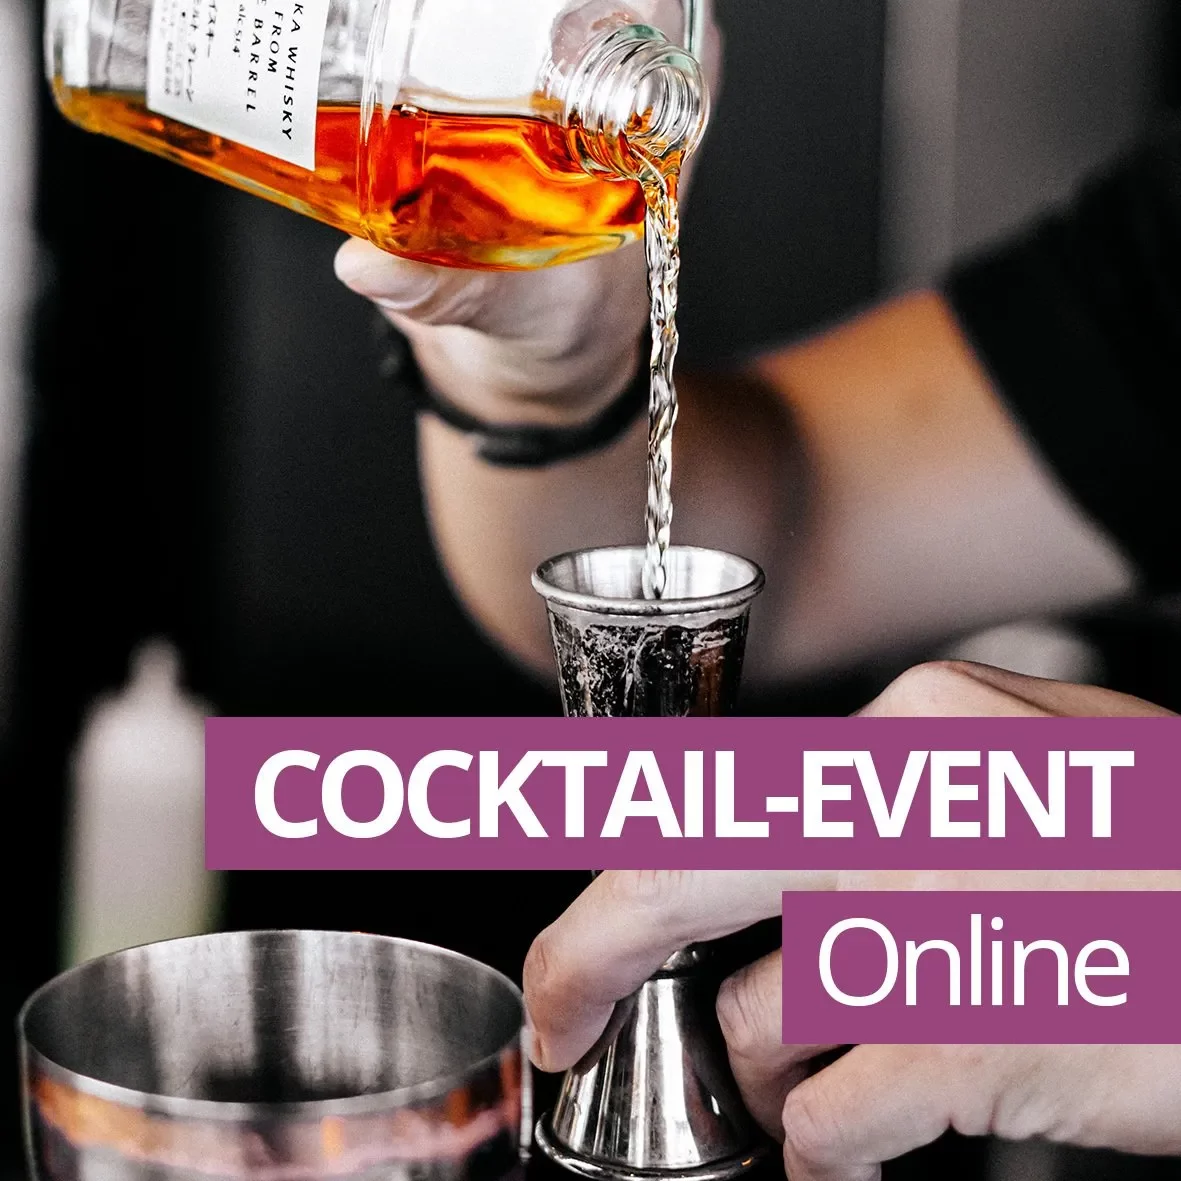 Online Cocktail-Event